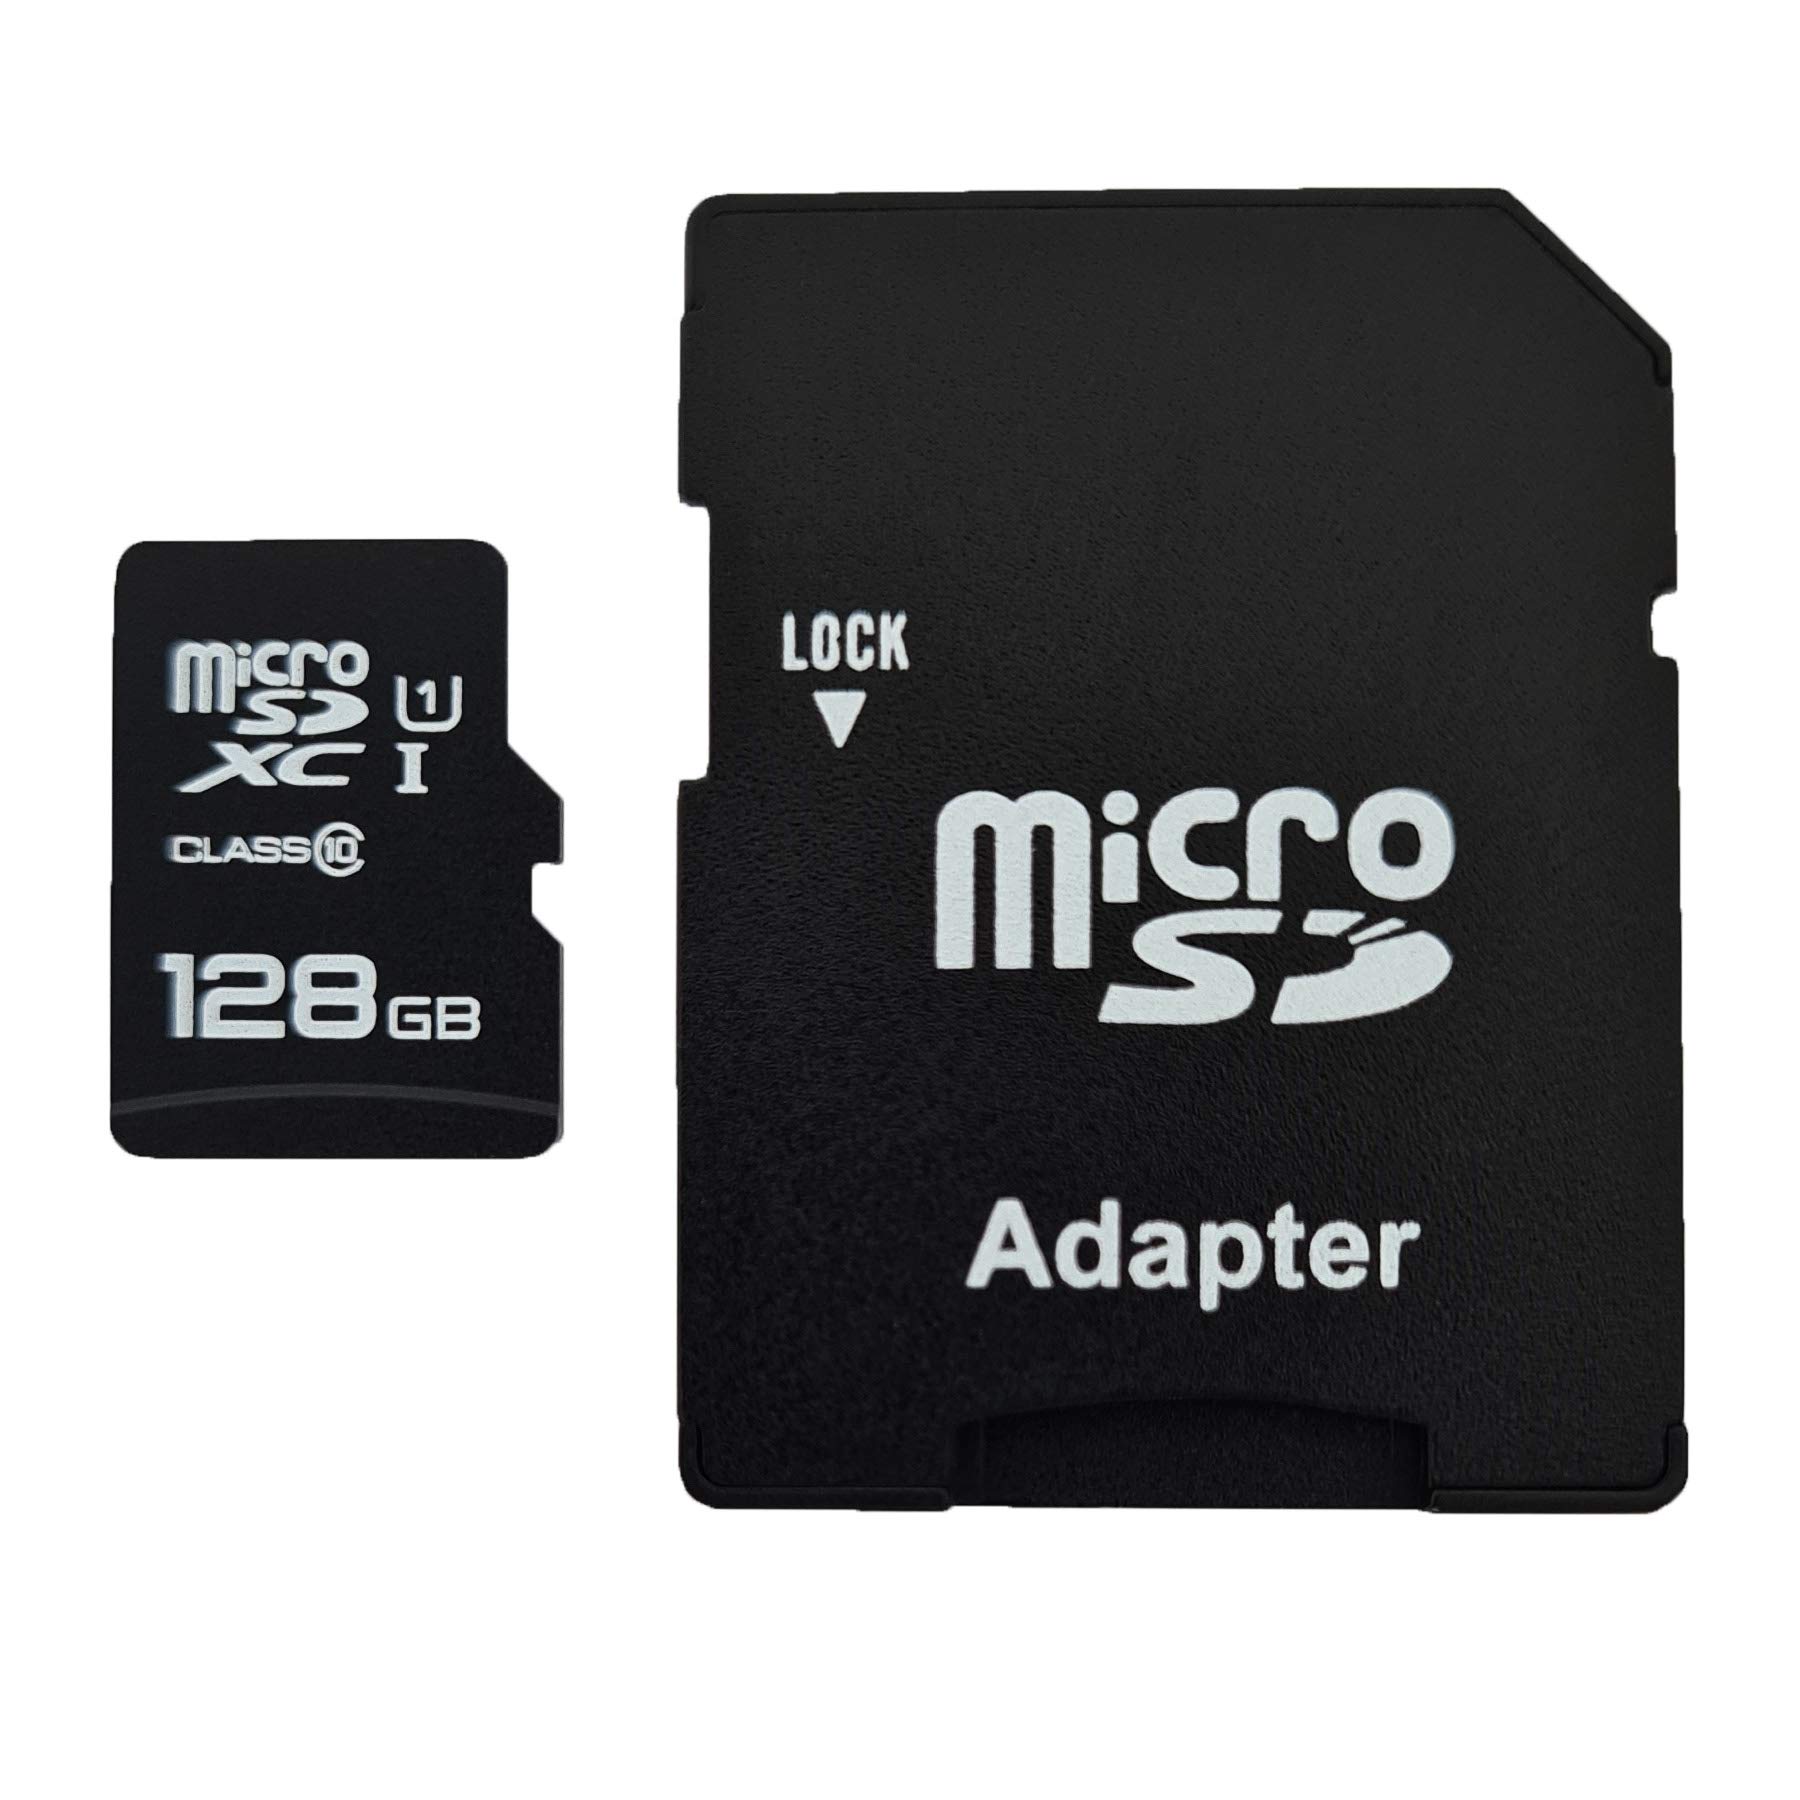 dekoelektropunktde 128GB MicroSDXC Speicherkarte mit Adapter Class 10 kompatibel für Canon EOS-1D X Mark III